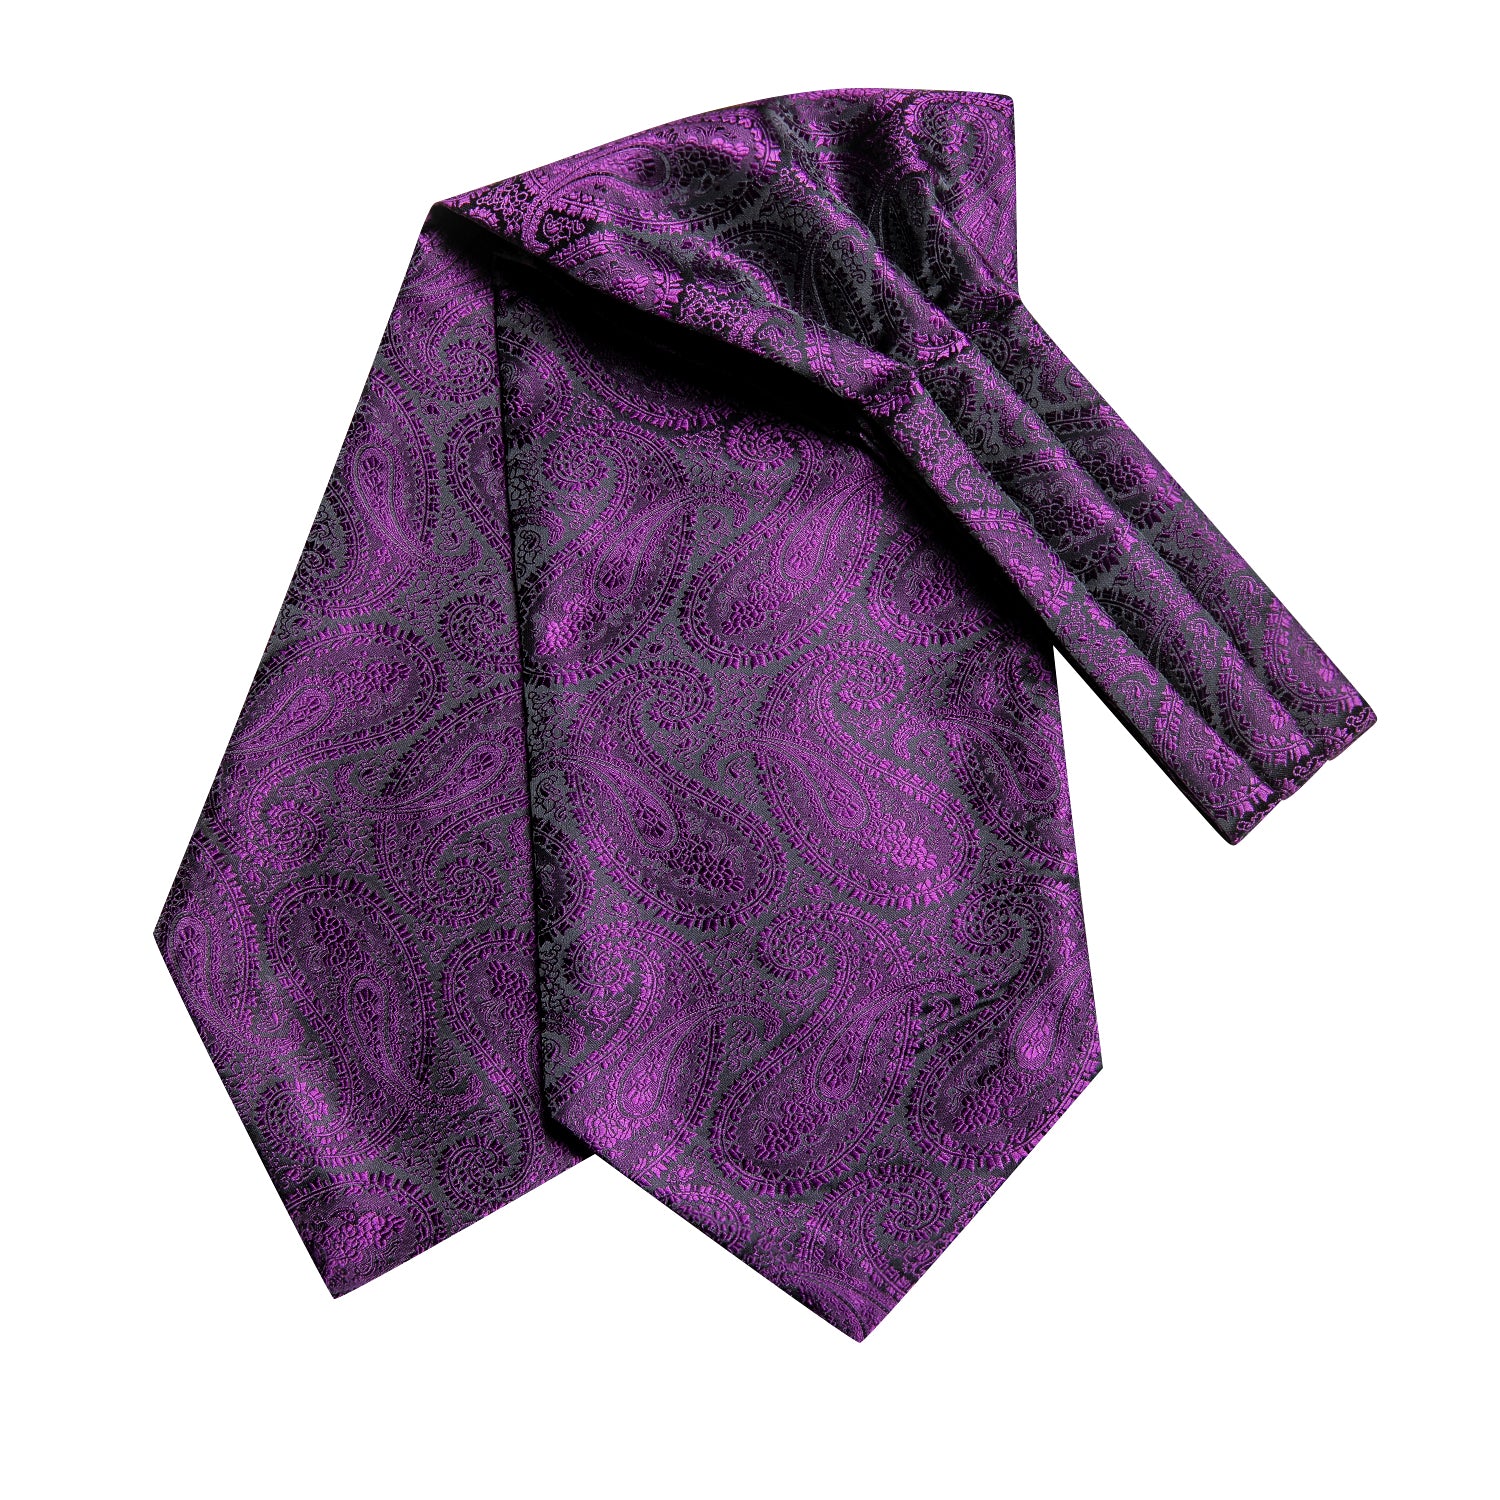 Deep Purple Paisley Ascot Pocket Square Cufflinks Set